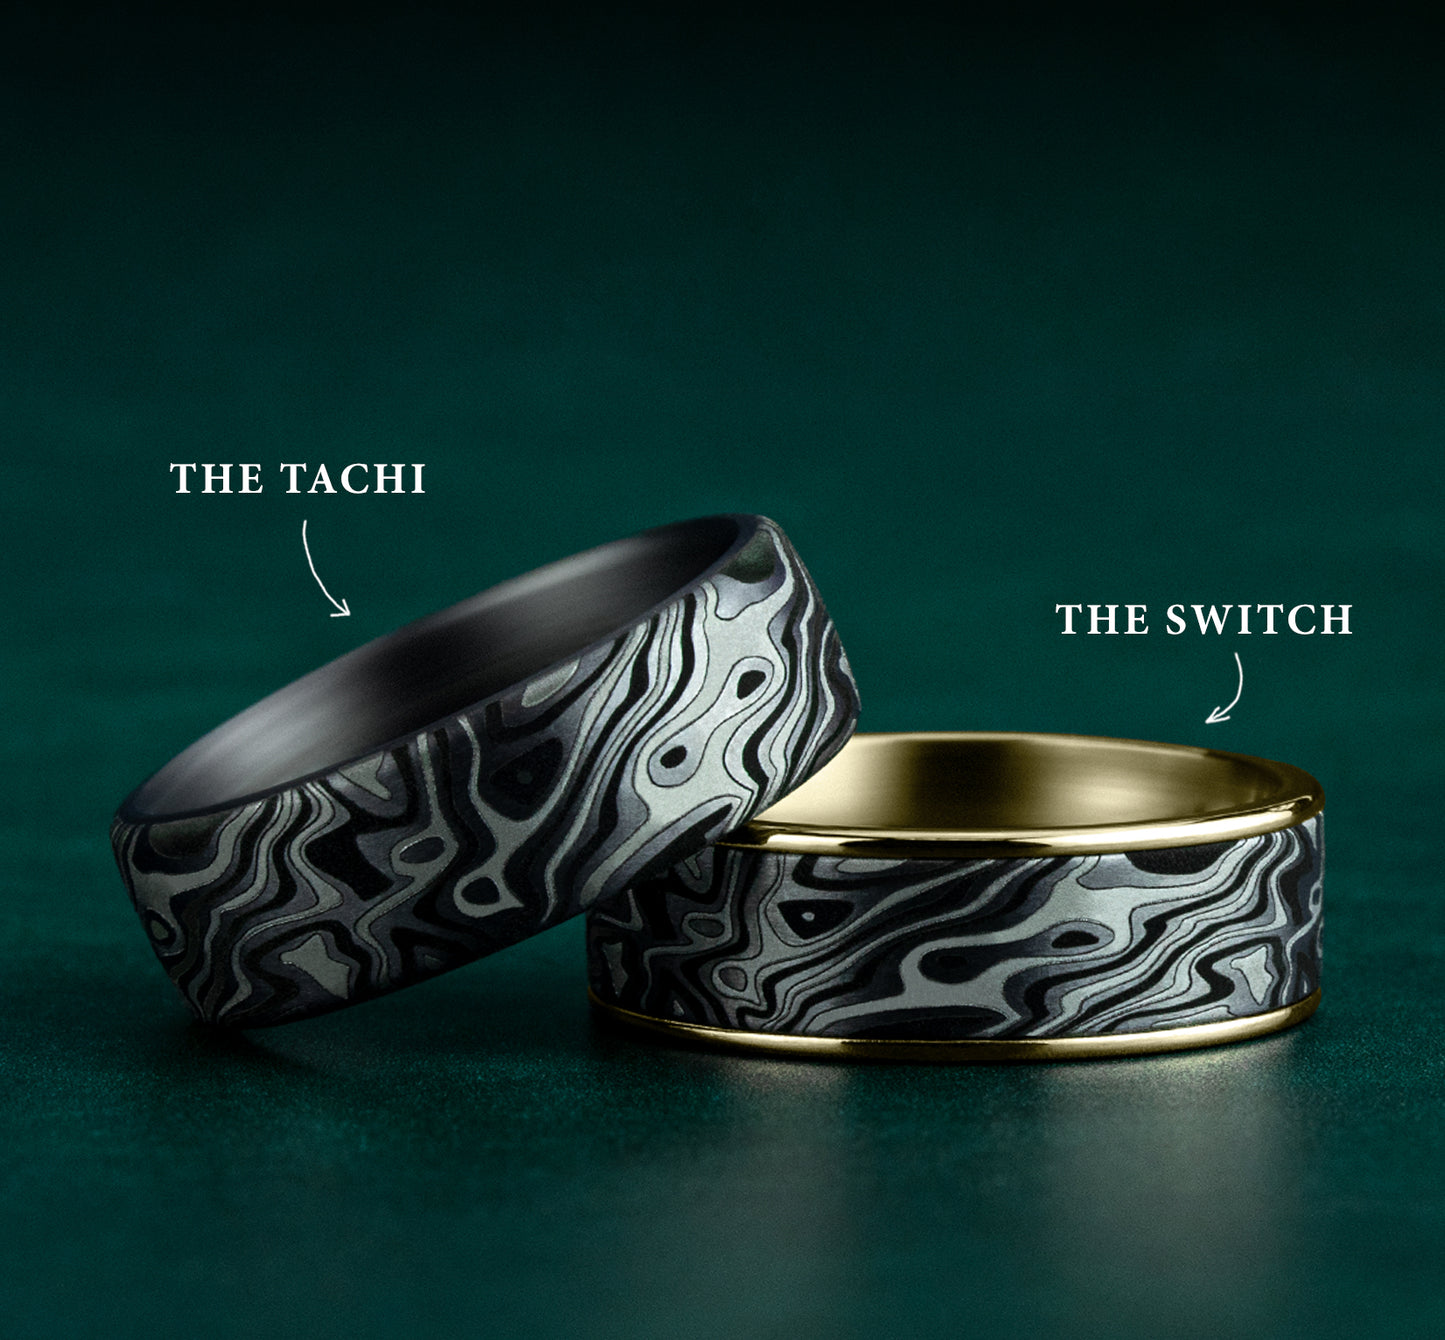 The Tachi